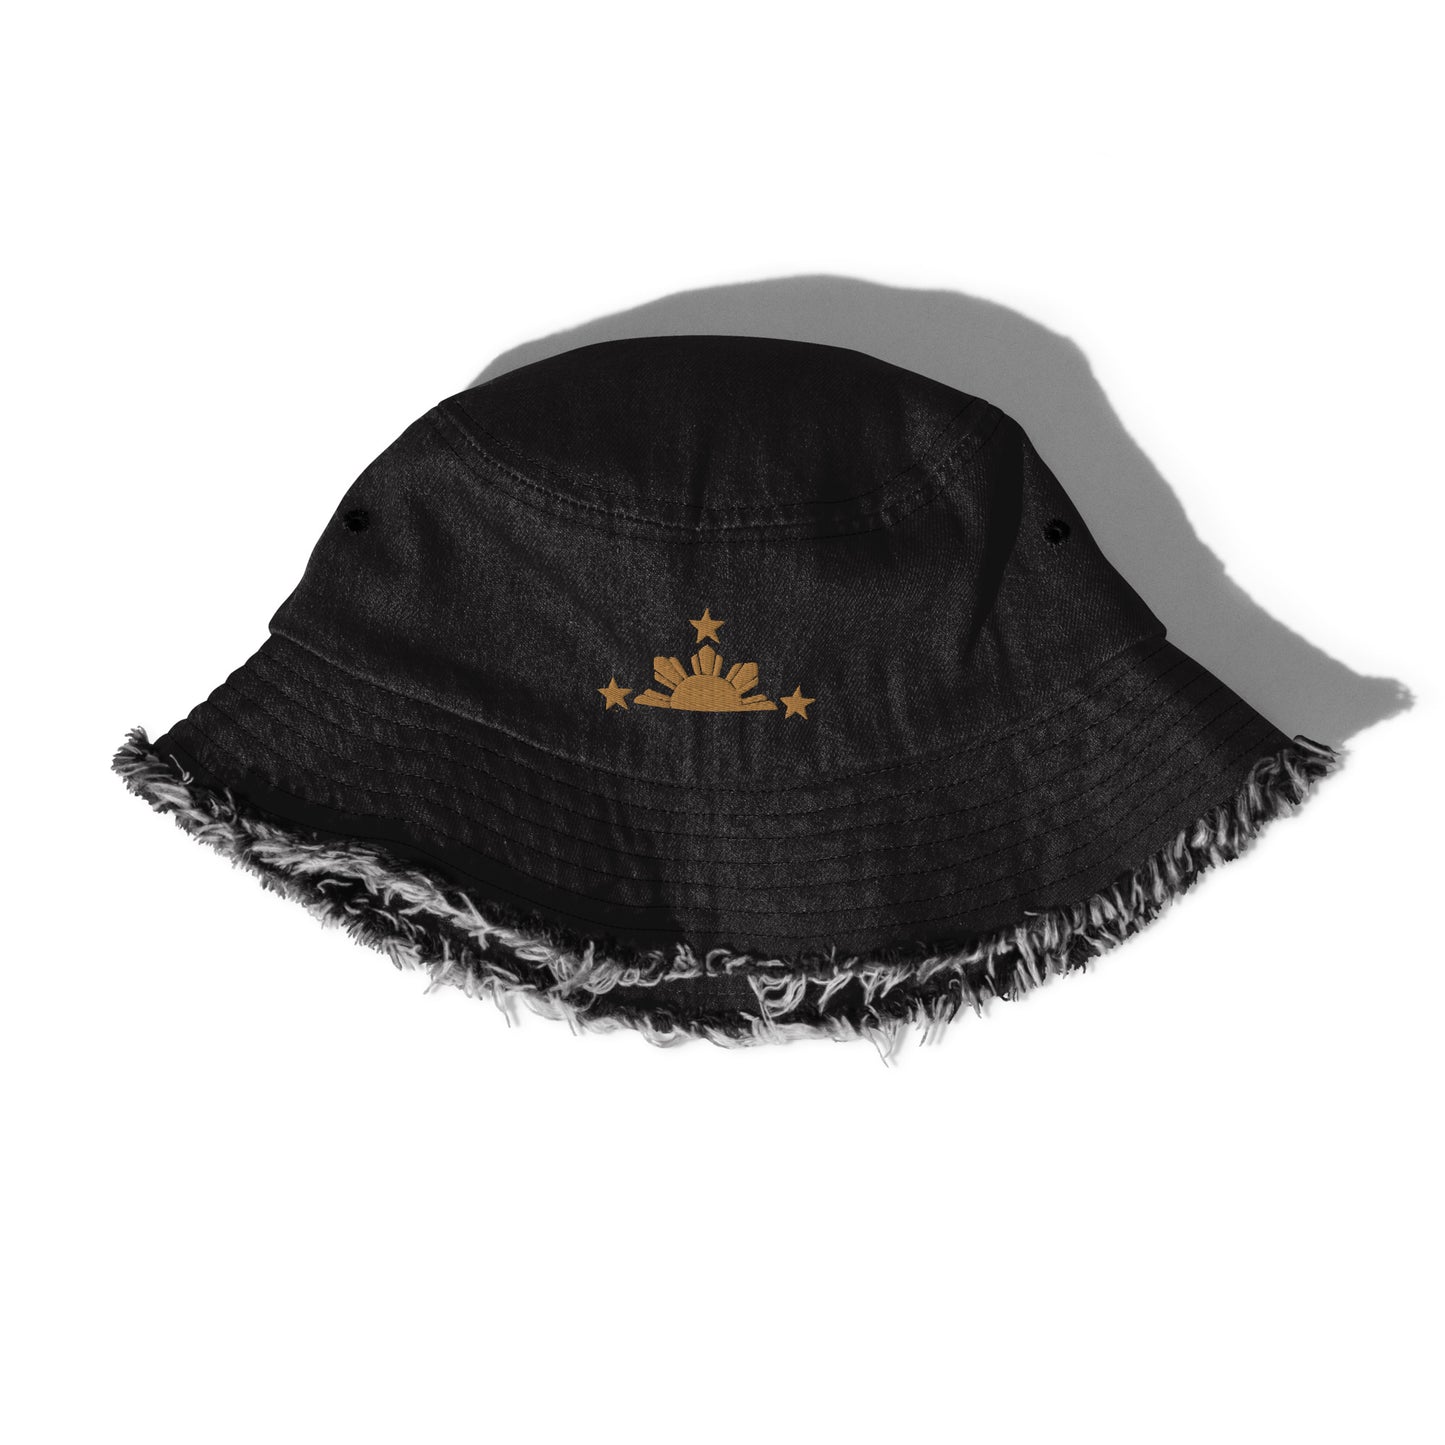 Stars & Sun Pinoy Embroidered Distressed Denim Bucket Hat in variant Black Denim.